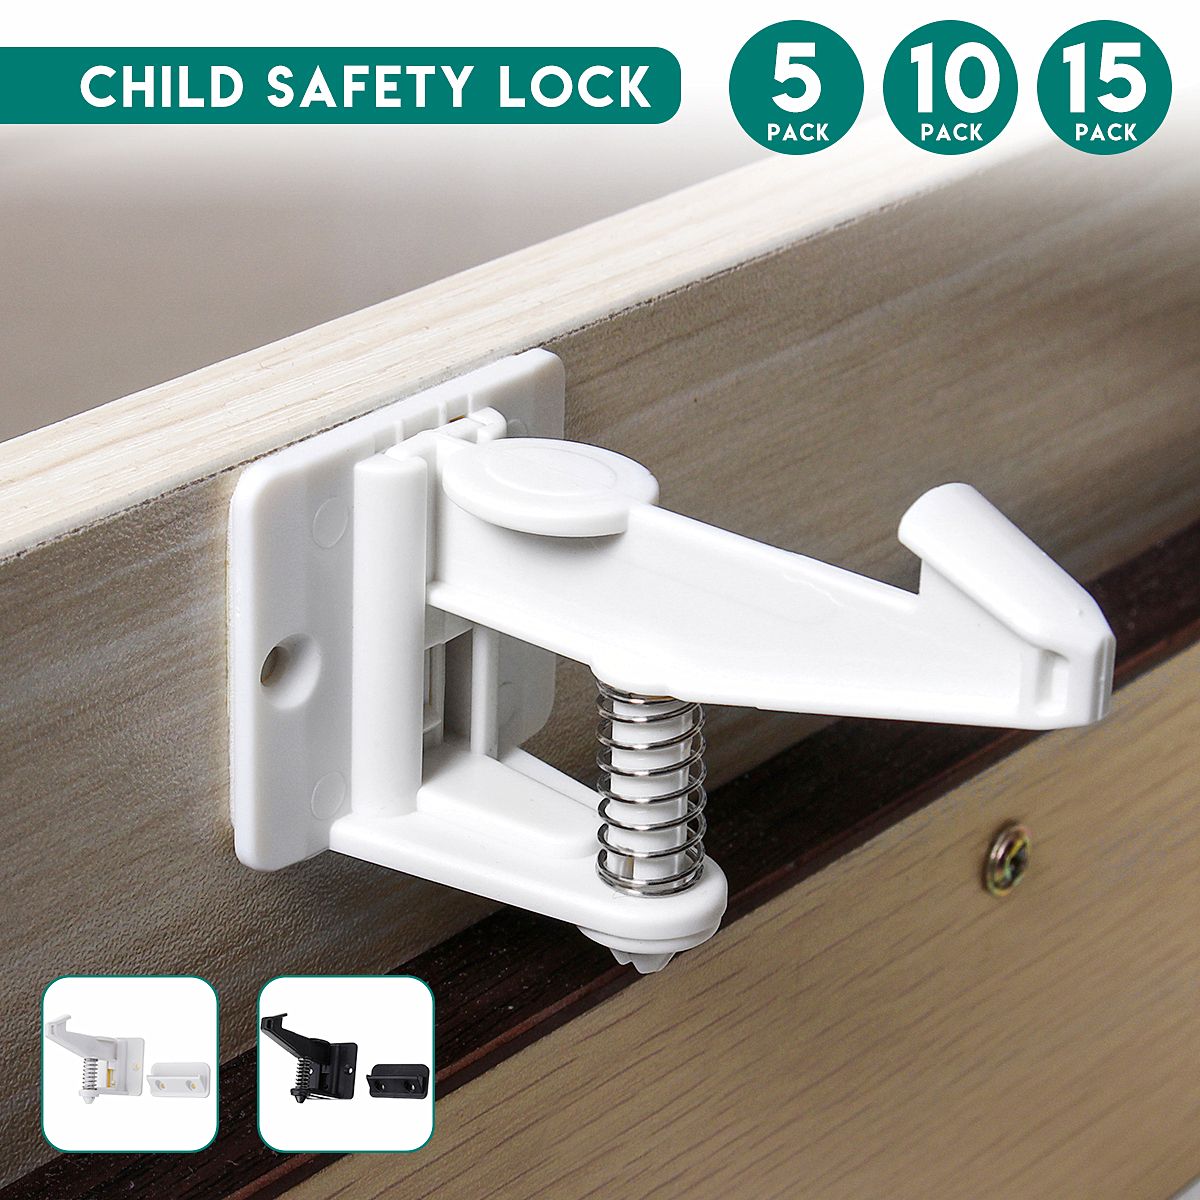 51015Pcs-No-Drilling-Cabinet-Door-Lock-Child-Safety-Keys-Lock-Adhesive-Locking-1531938